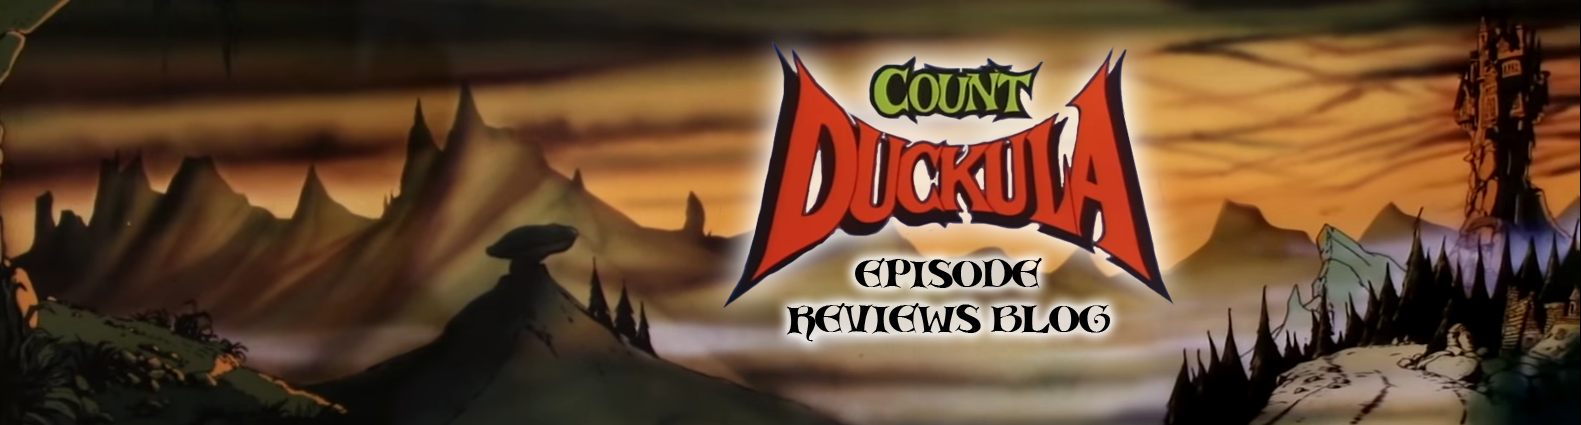  Count Duckula episode review blog